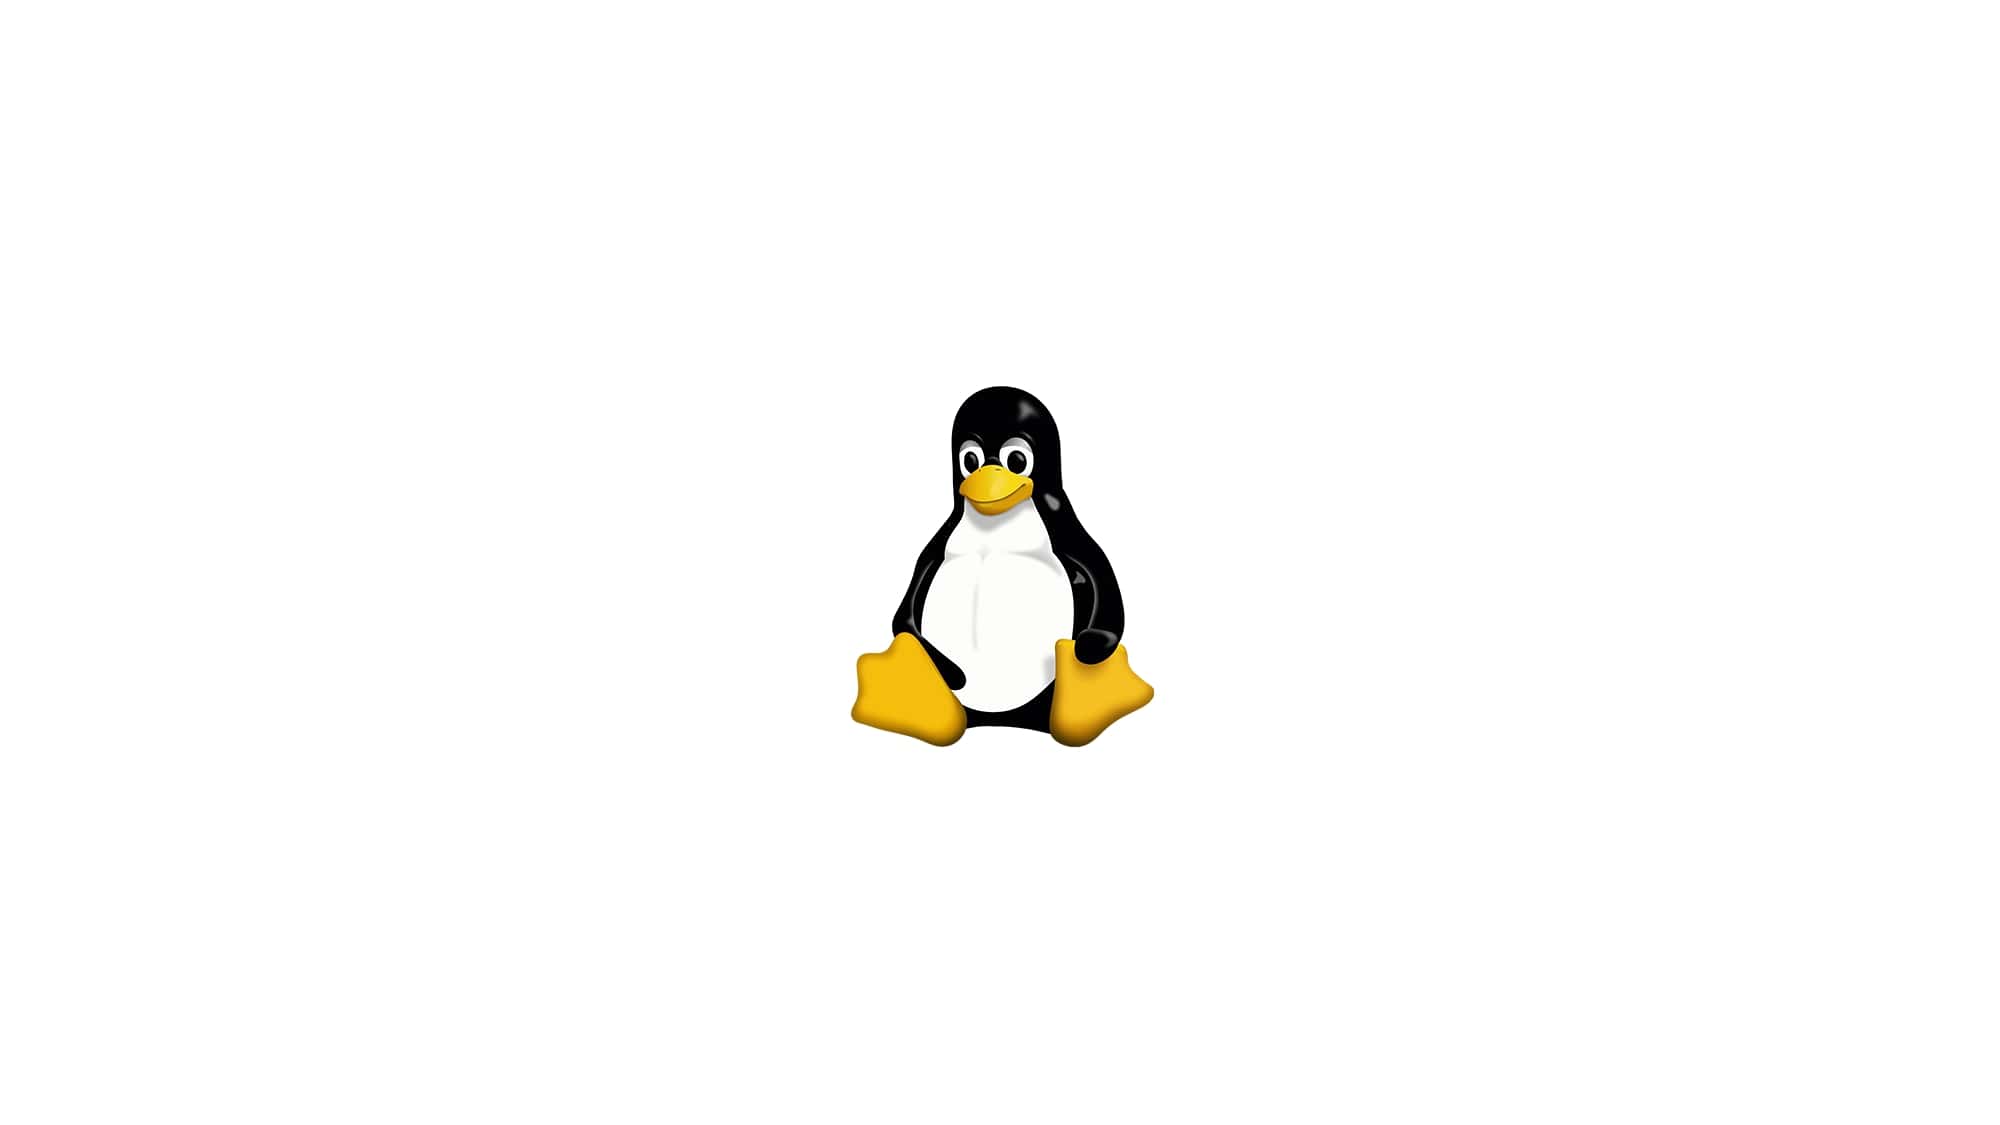 Vk linux. Пингвин линукс. Обои линукс Пингвин. GNU Linux. Linux logo.